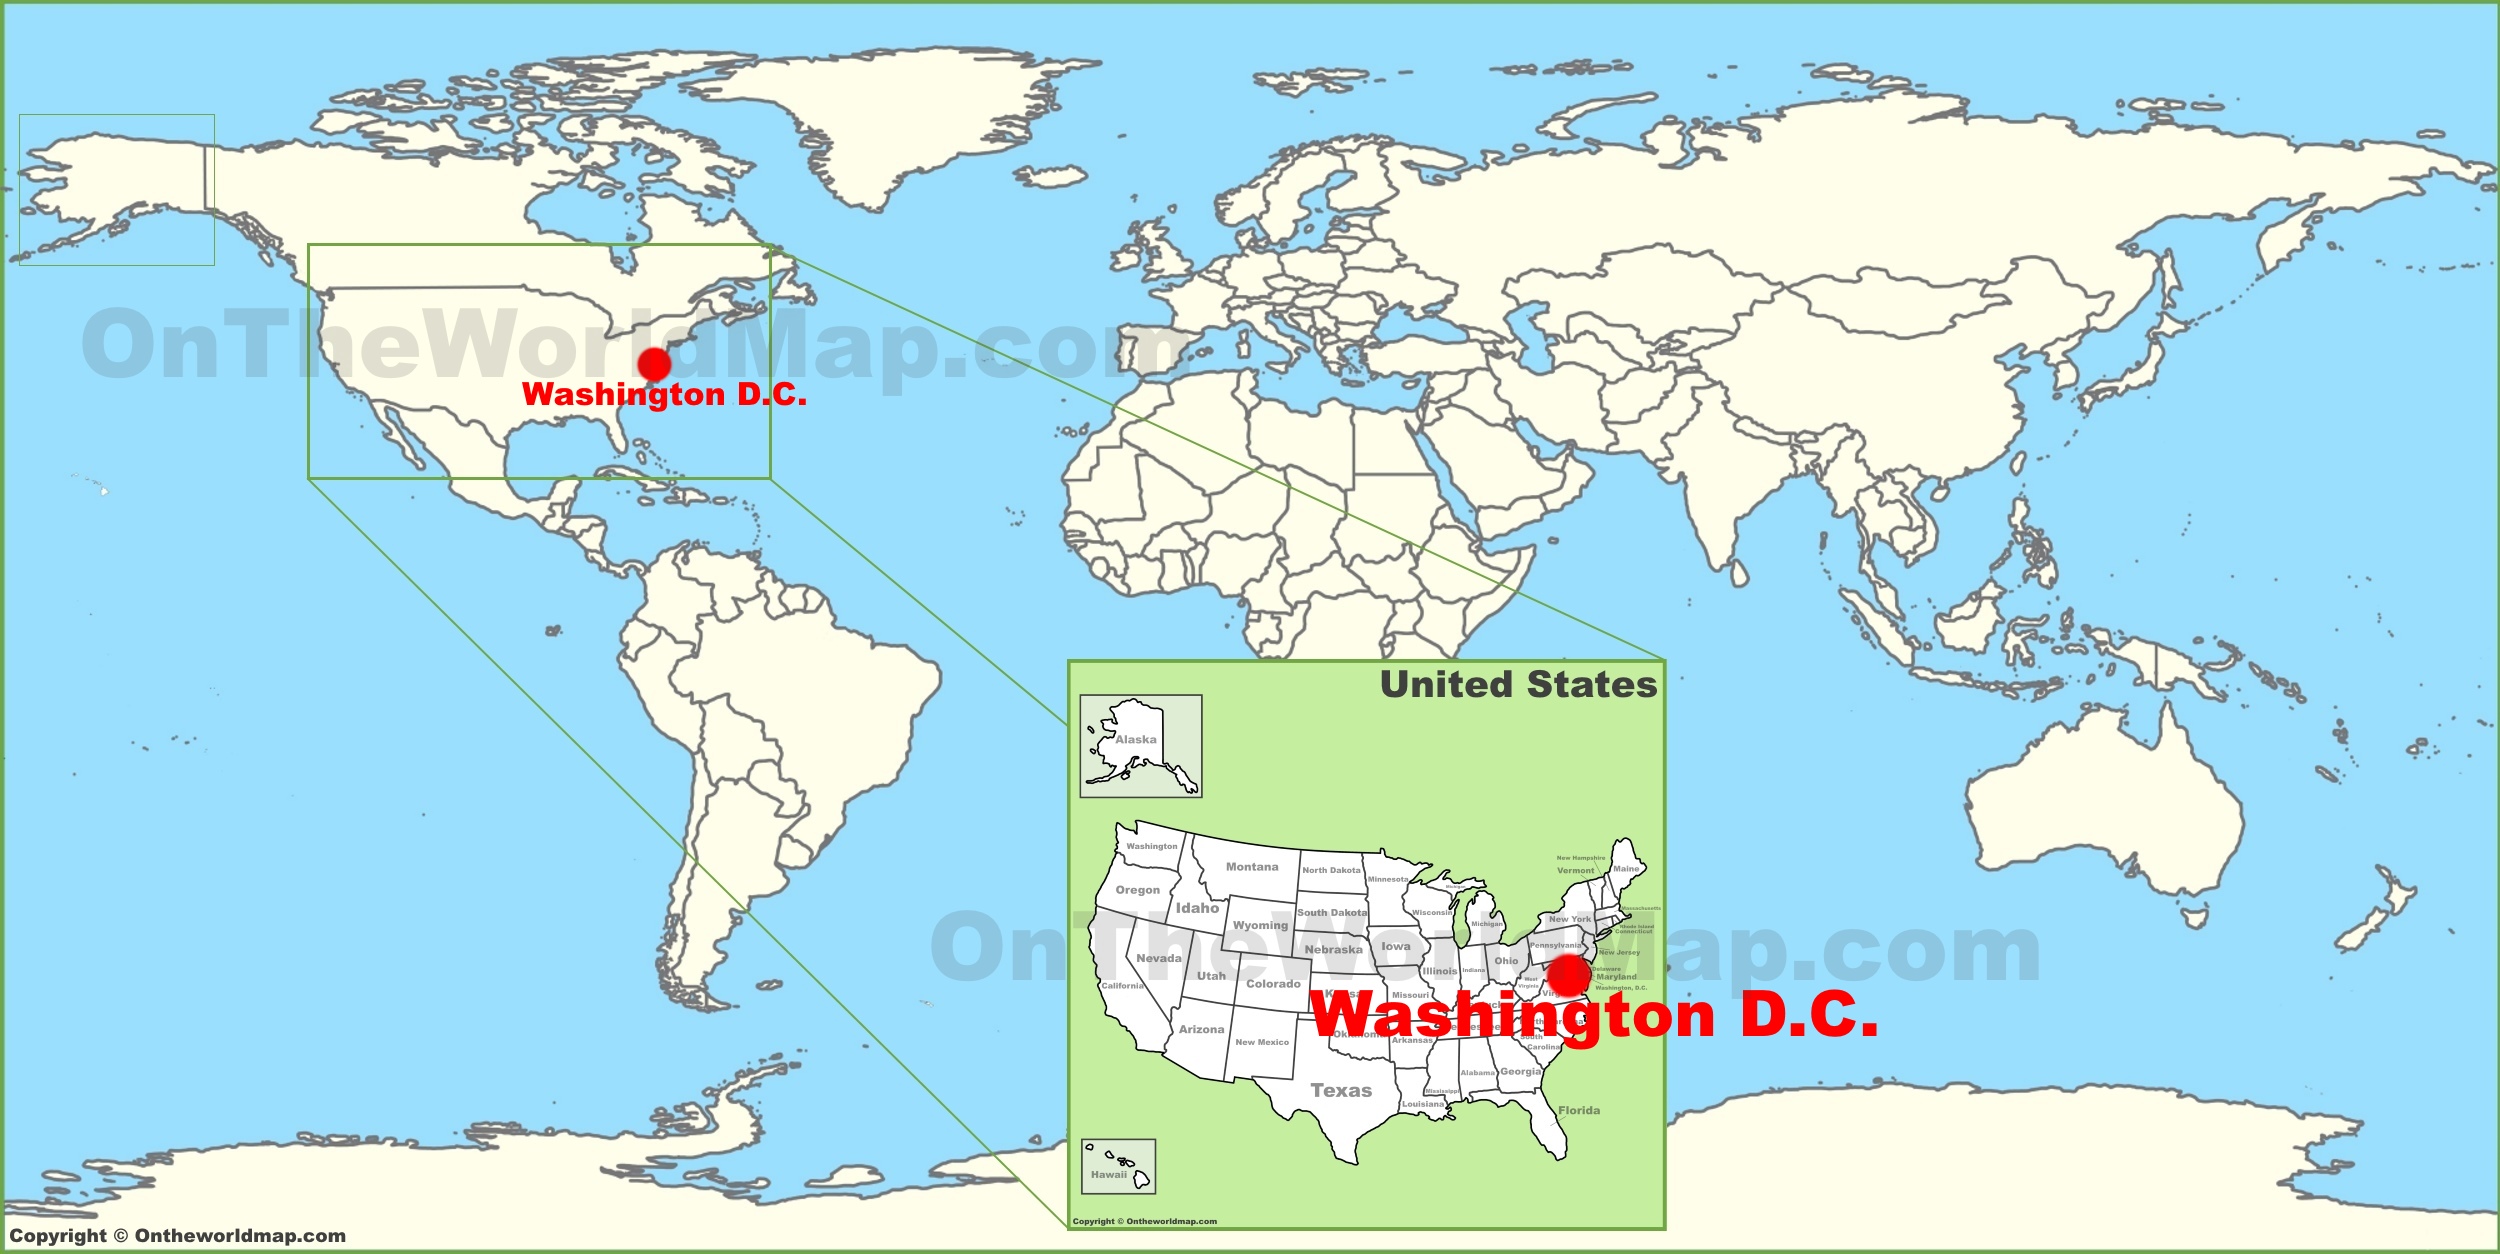 Washington D C On The World Map